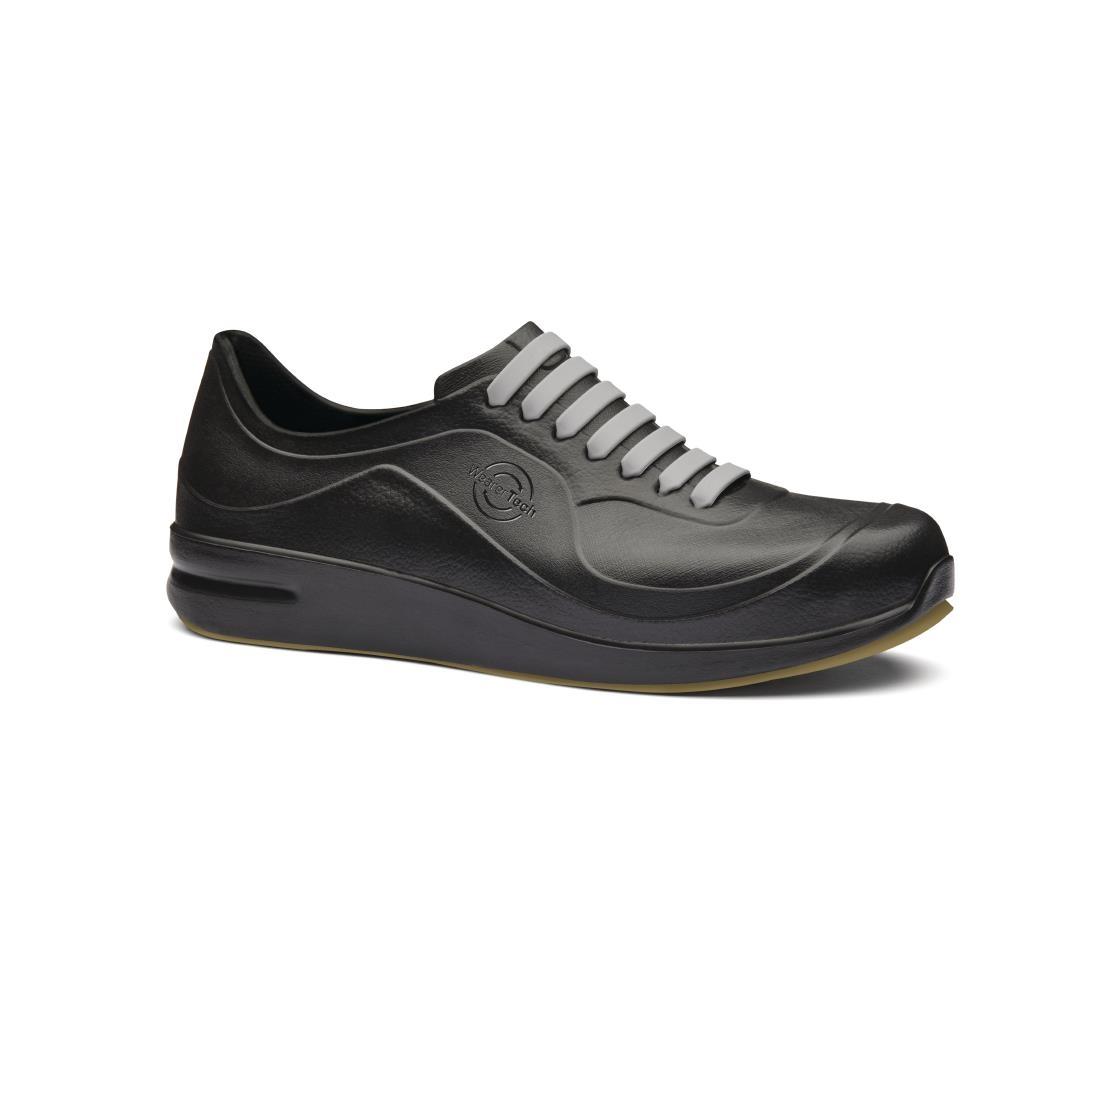 WearerTech Unisex Energise Black Safety Shoes Black 7 - BB190-41  - 1